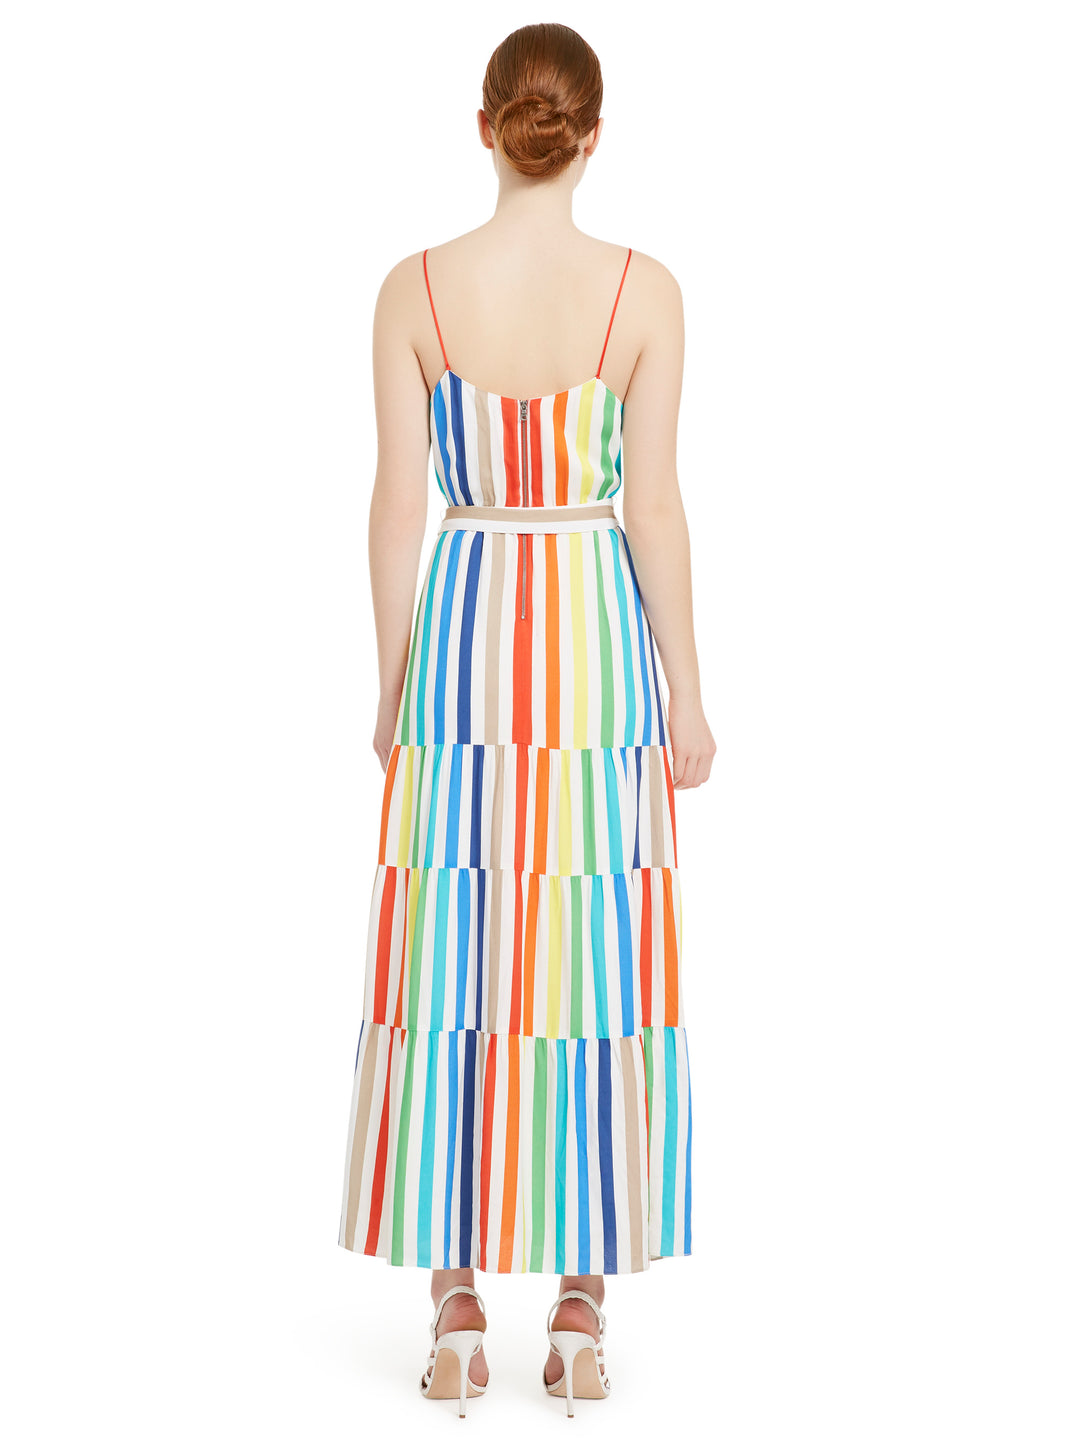 Strap Alice - Dress Midi Spaghetti Olivia Janan Blond Genius Peasant Rainbow + – Stri